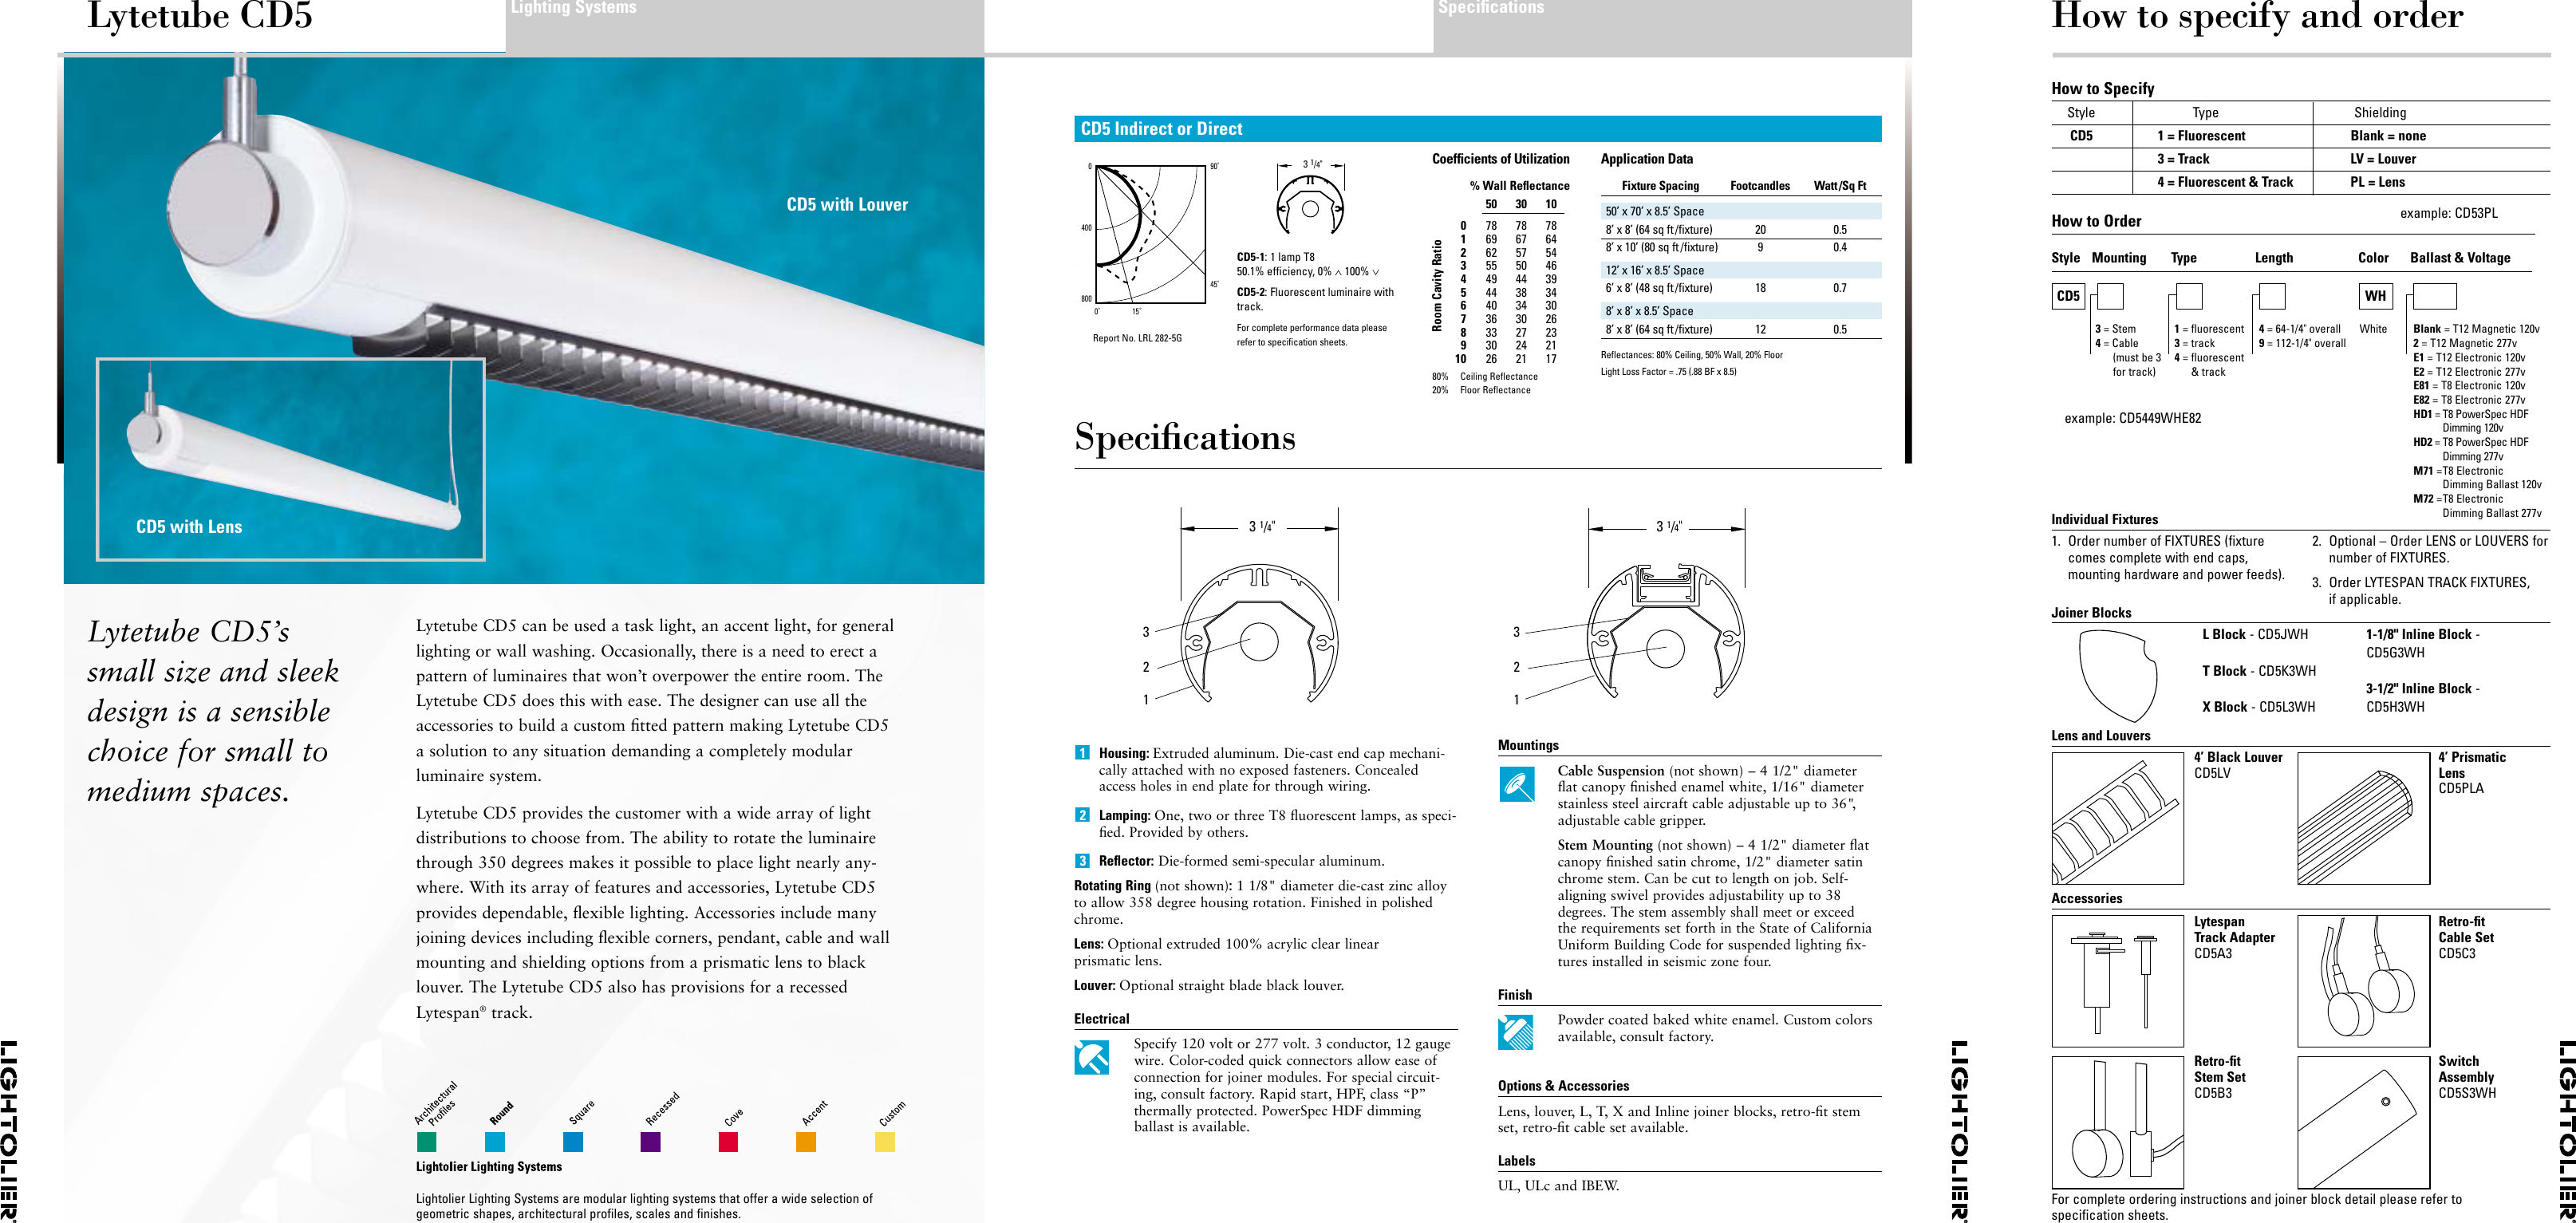 Page 2 of 2 - Lightolier Lightolier-Lytetube-Cd5-Users-Manual- 99-1337CD5 6pg Brochure  Lightolier-lytetube-cd5-users-manual